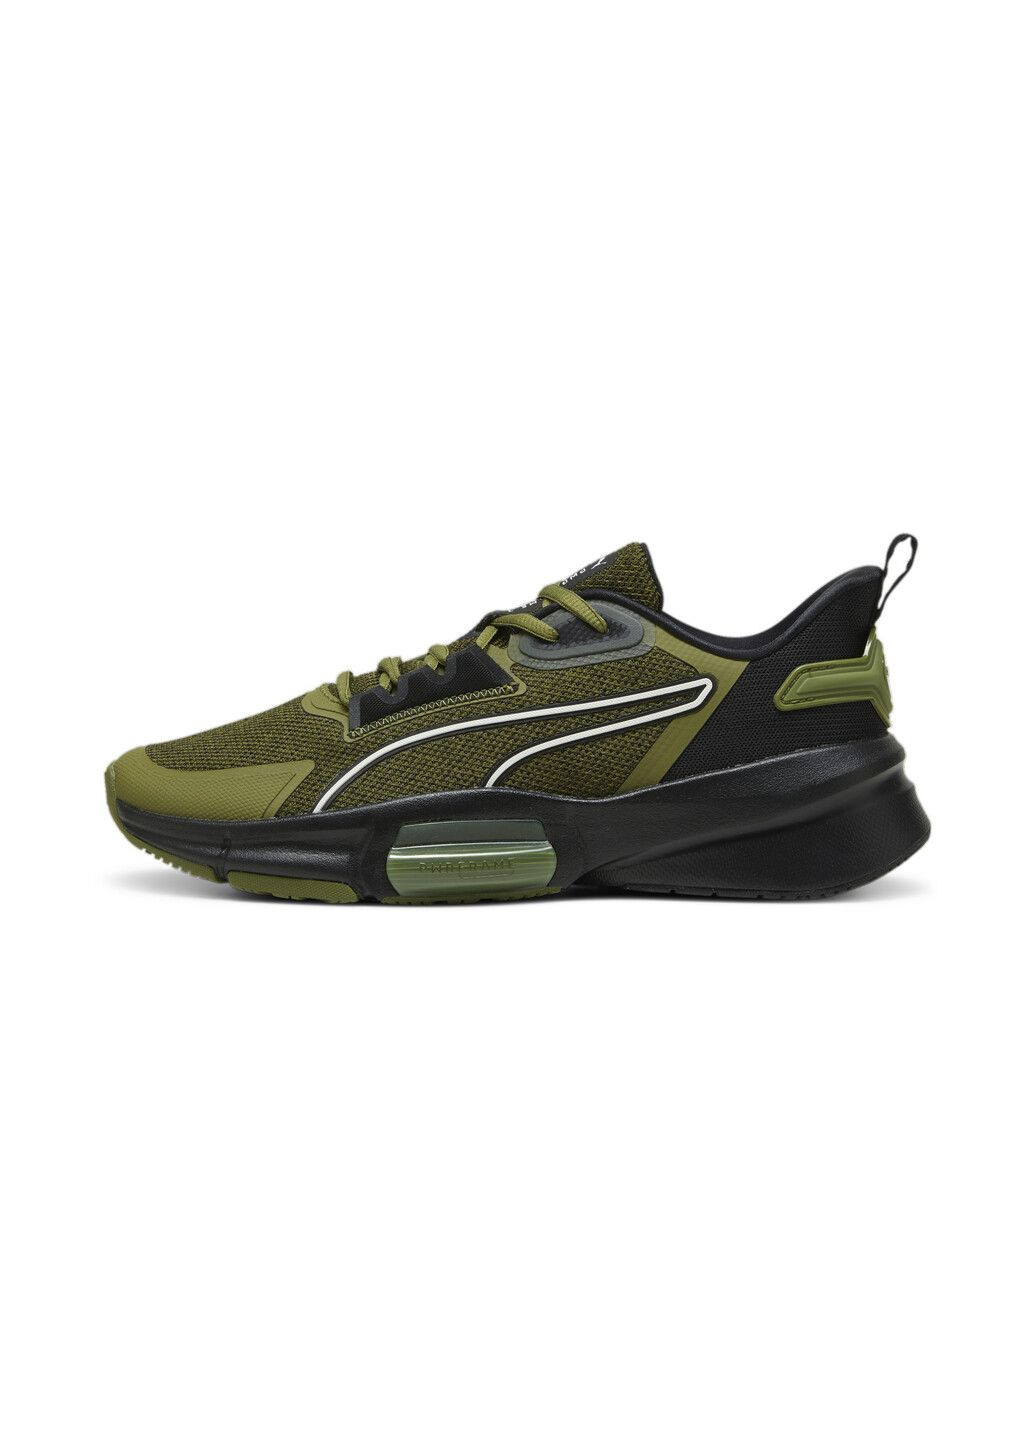 Зелені всесезон кросівки pwrframe tr 3 neo force training shoes Puma